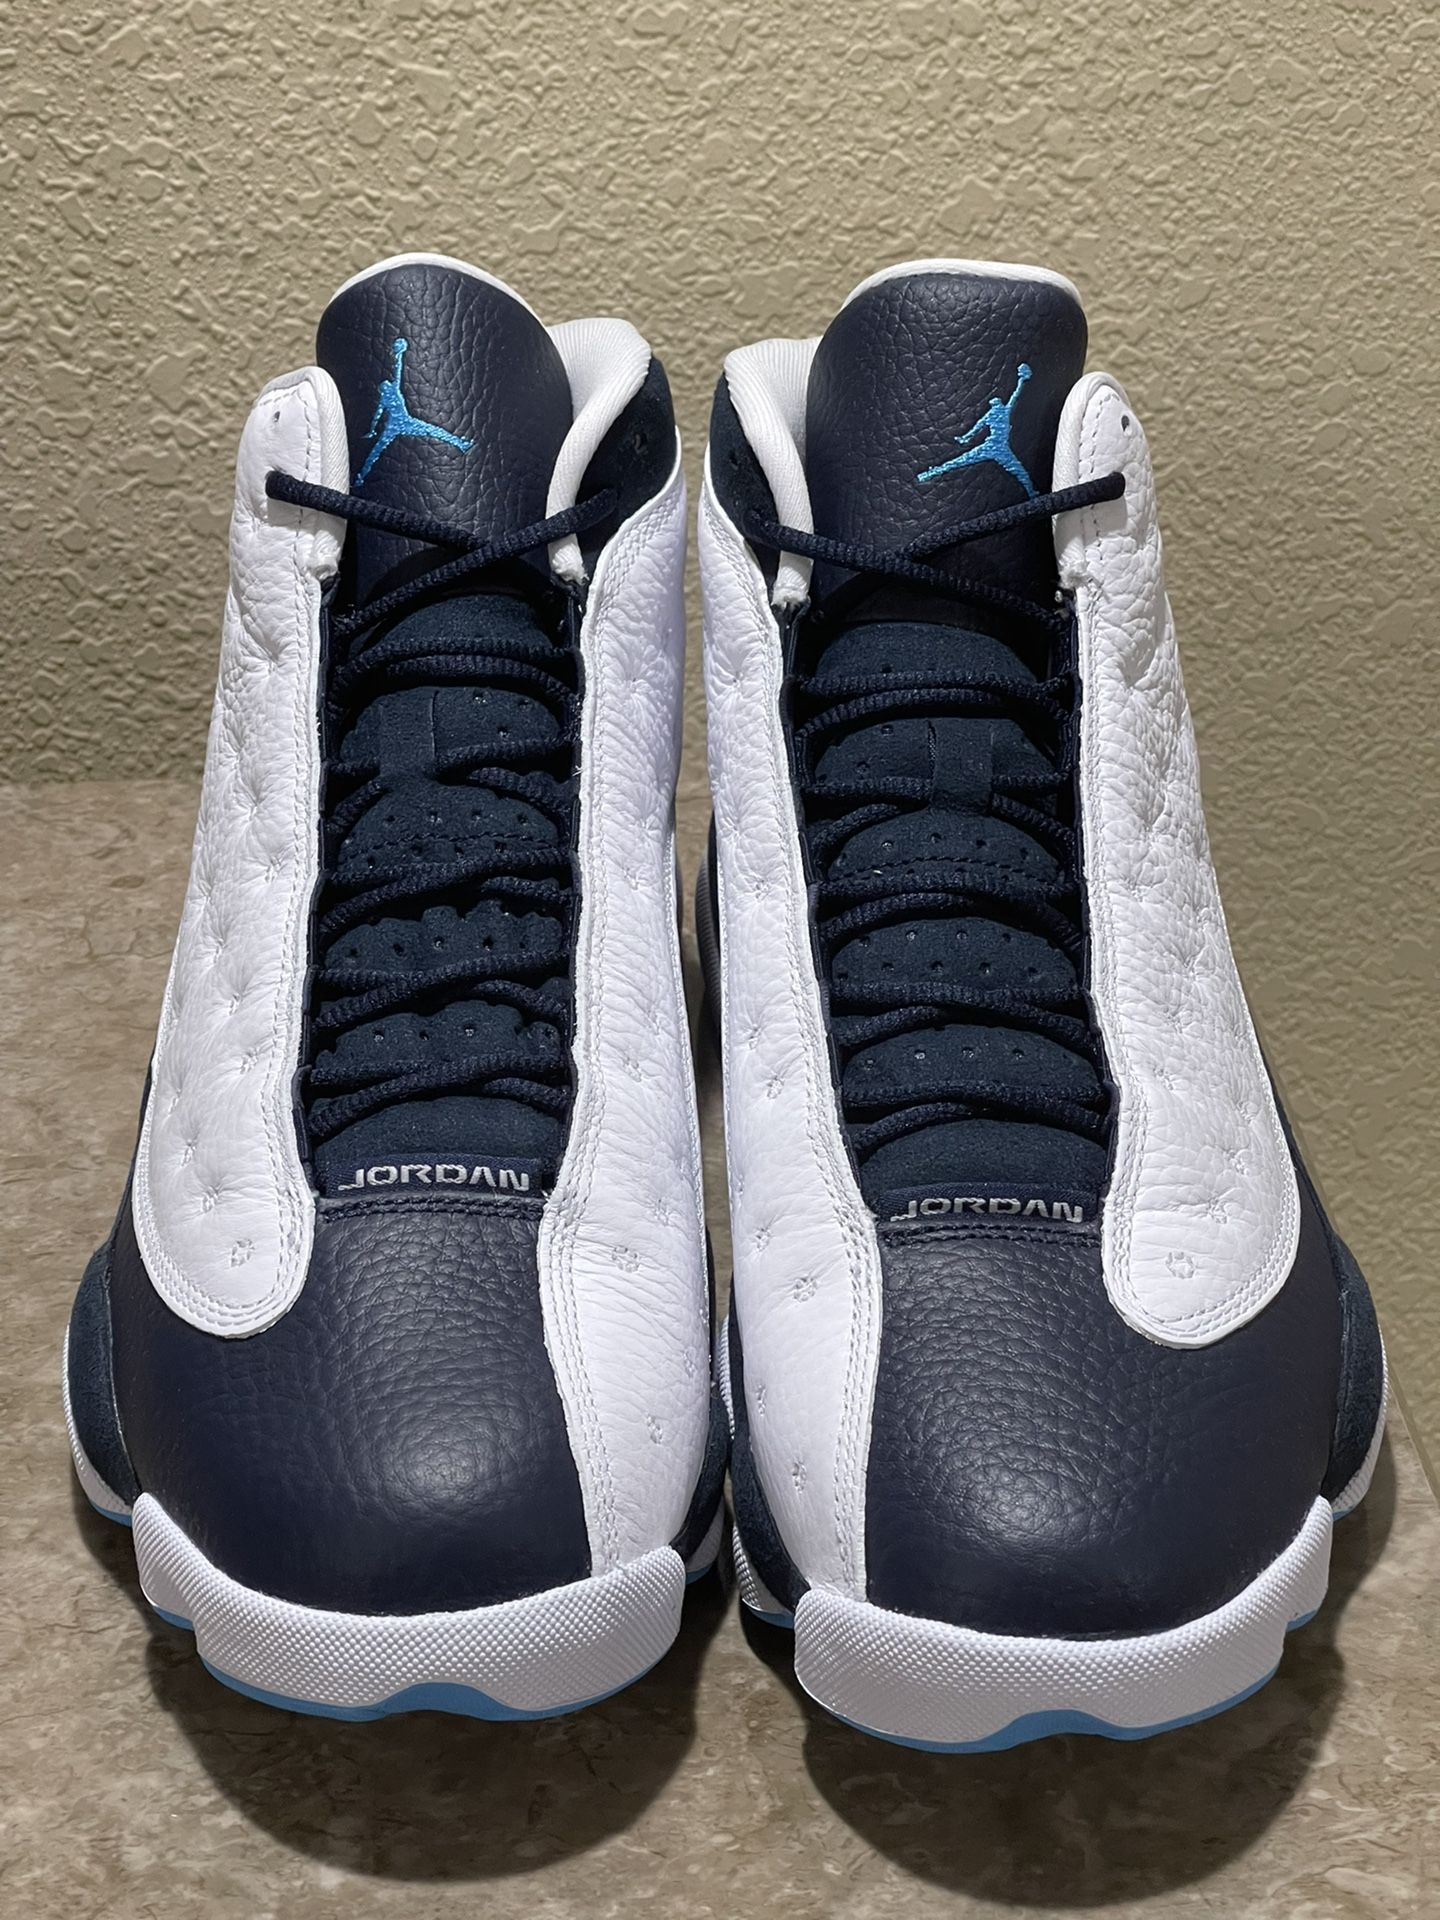 Nike air Jordan Obsidian Powder blue 13 Size 11